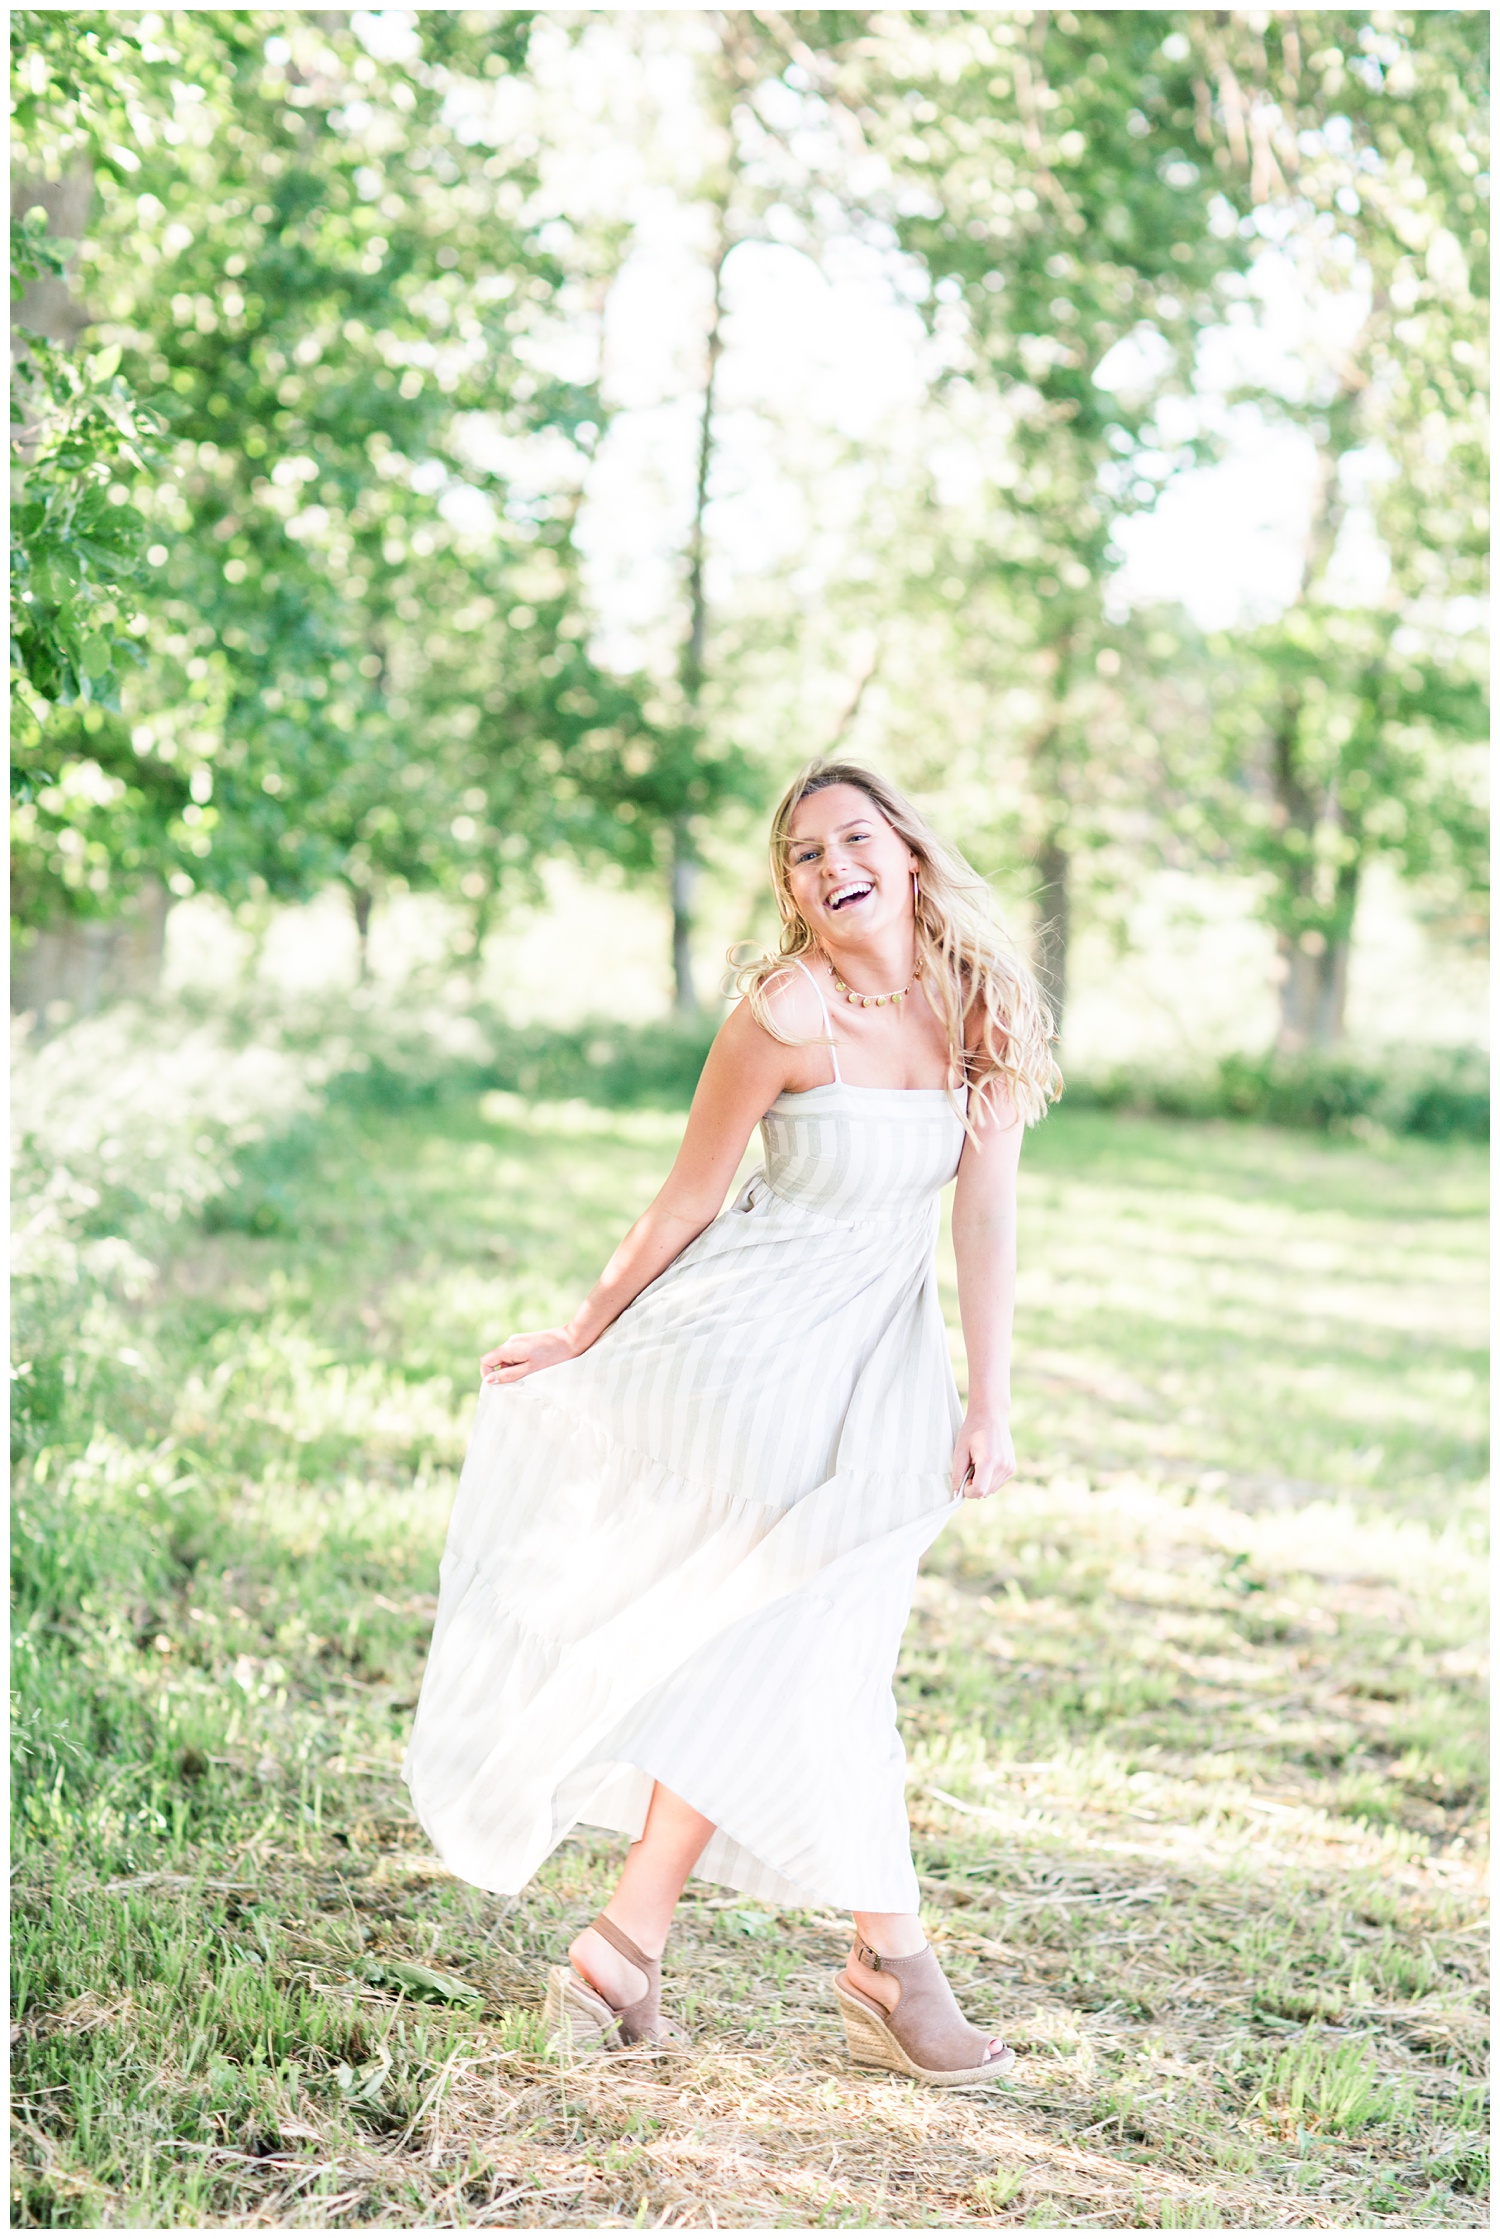 Senior girl dances in a grassy field wearing a flowing white summer dress | CB Studio